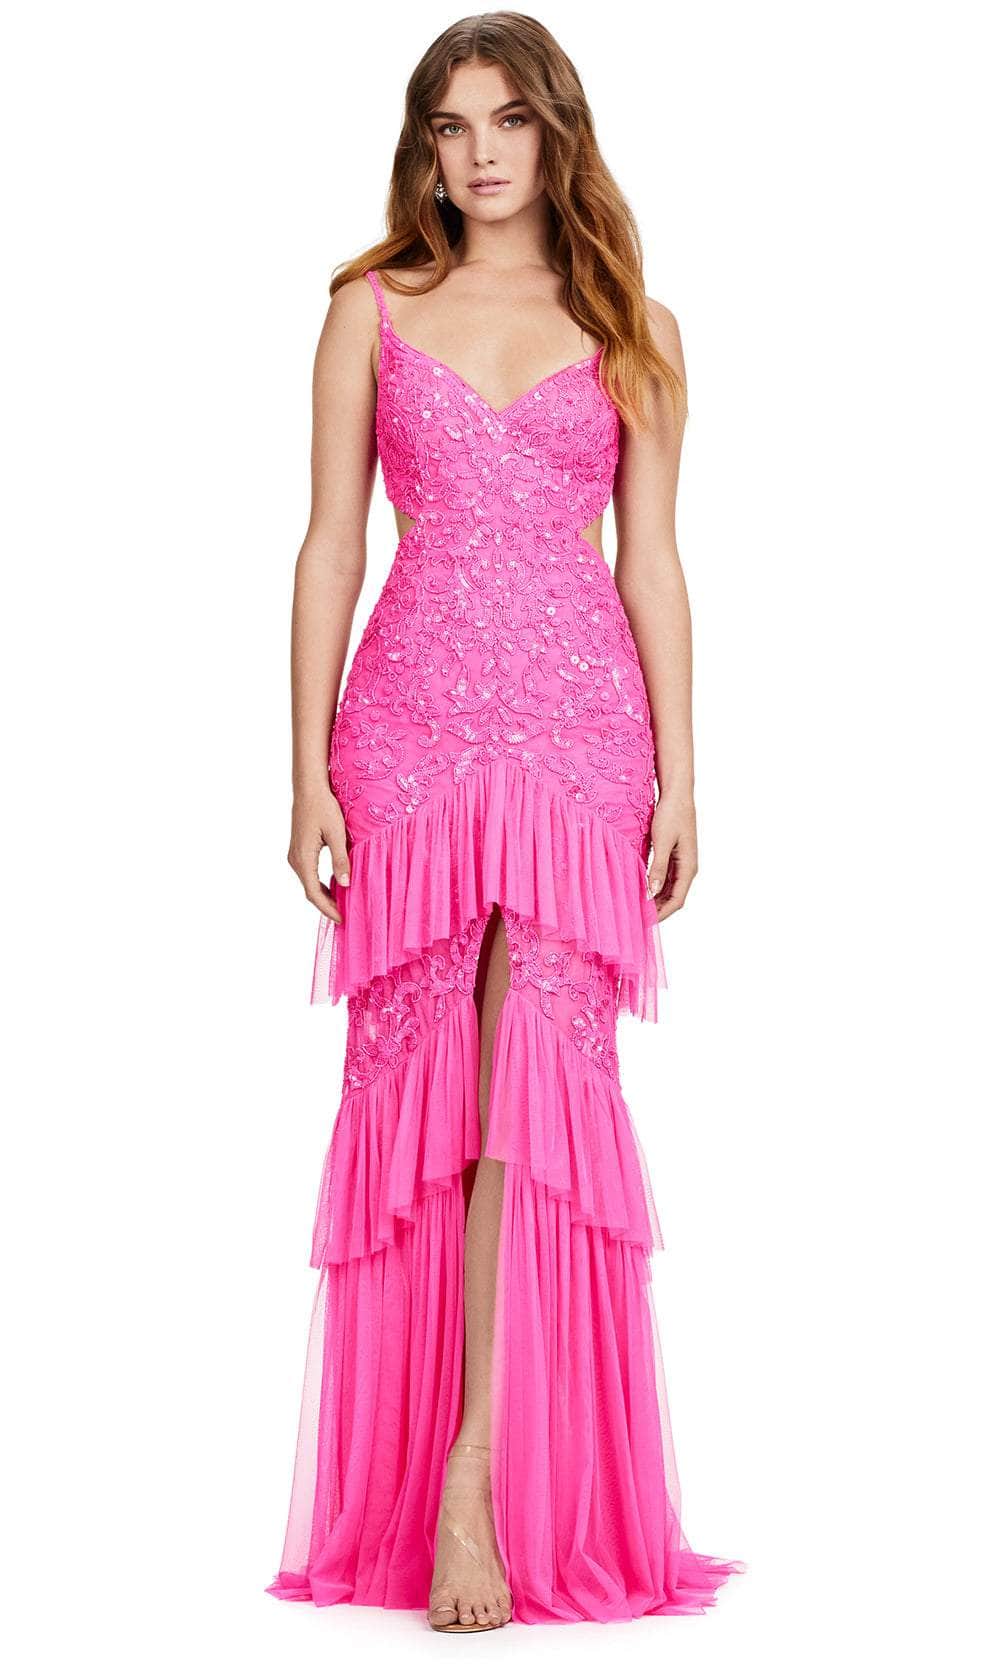 Ashley Lauren 11437 - Ruffle Ornate Prom Dress 00 /  Hot Pink